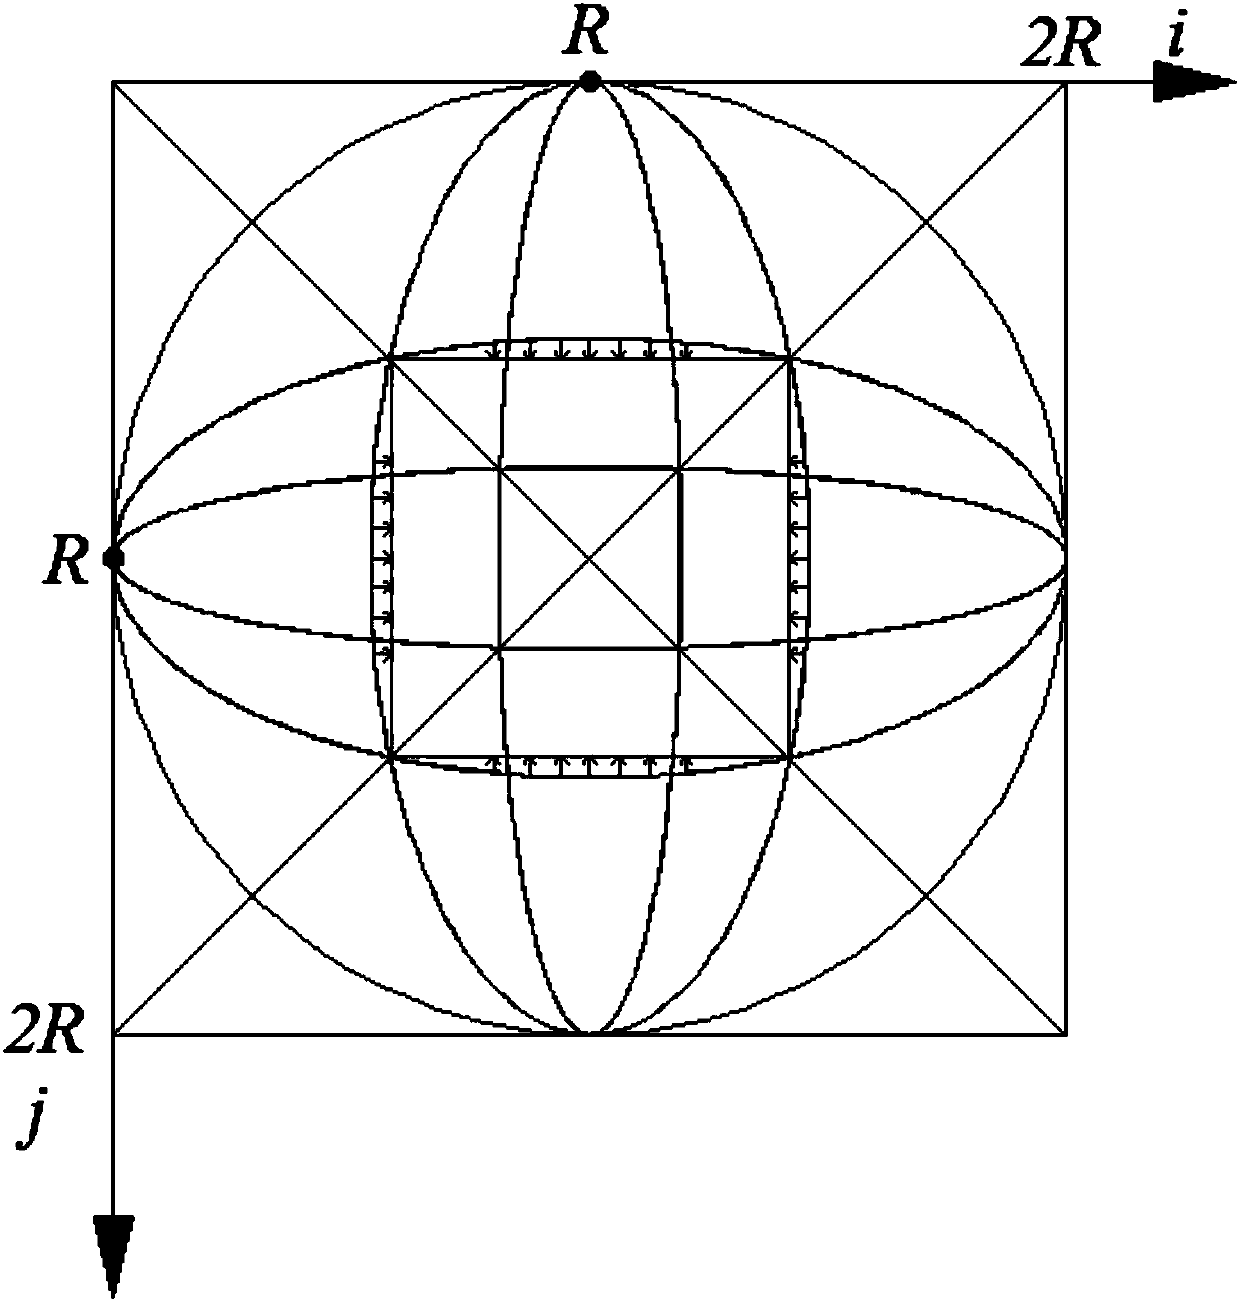 Fisheye image distortion correction method based on elliptical division